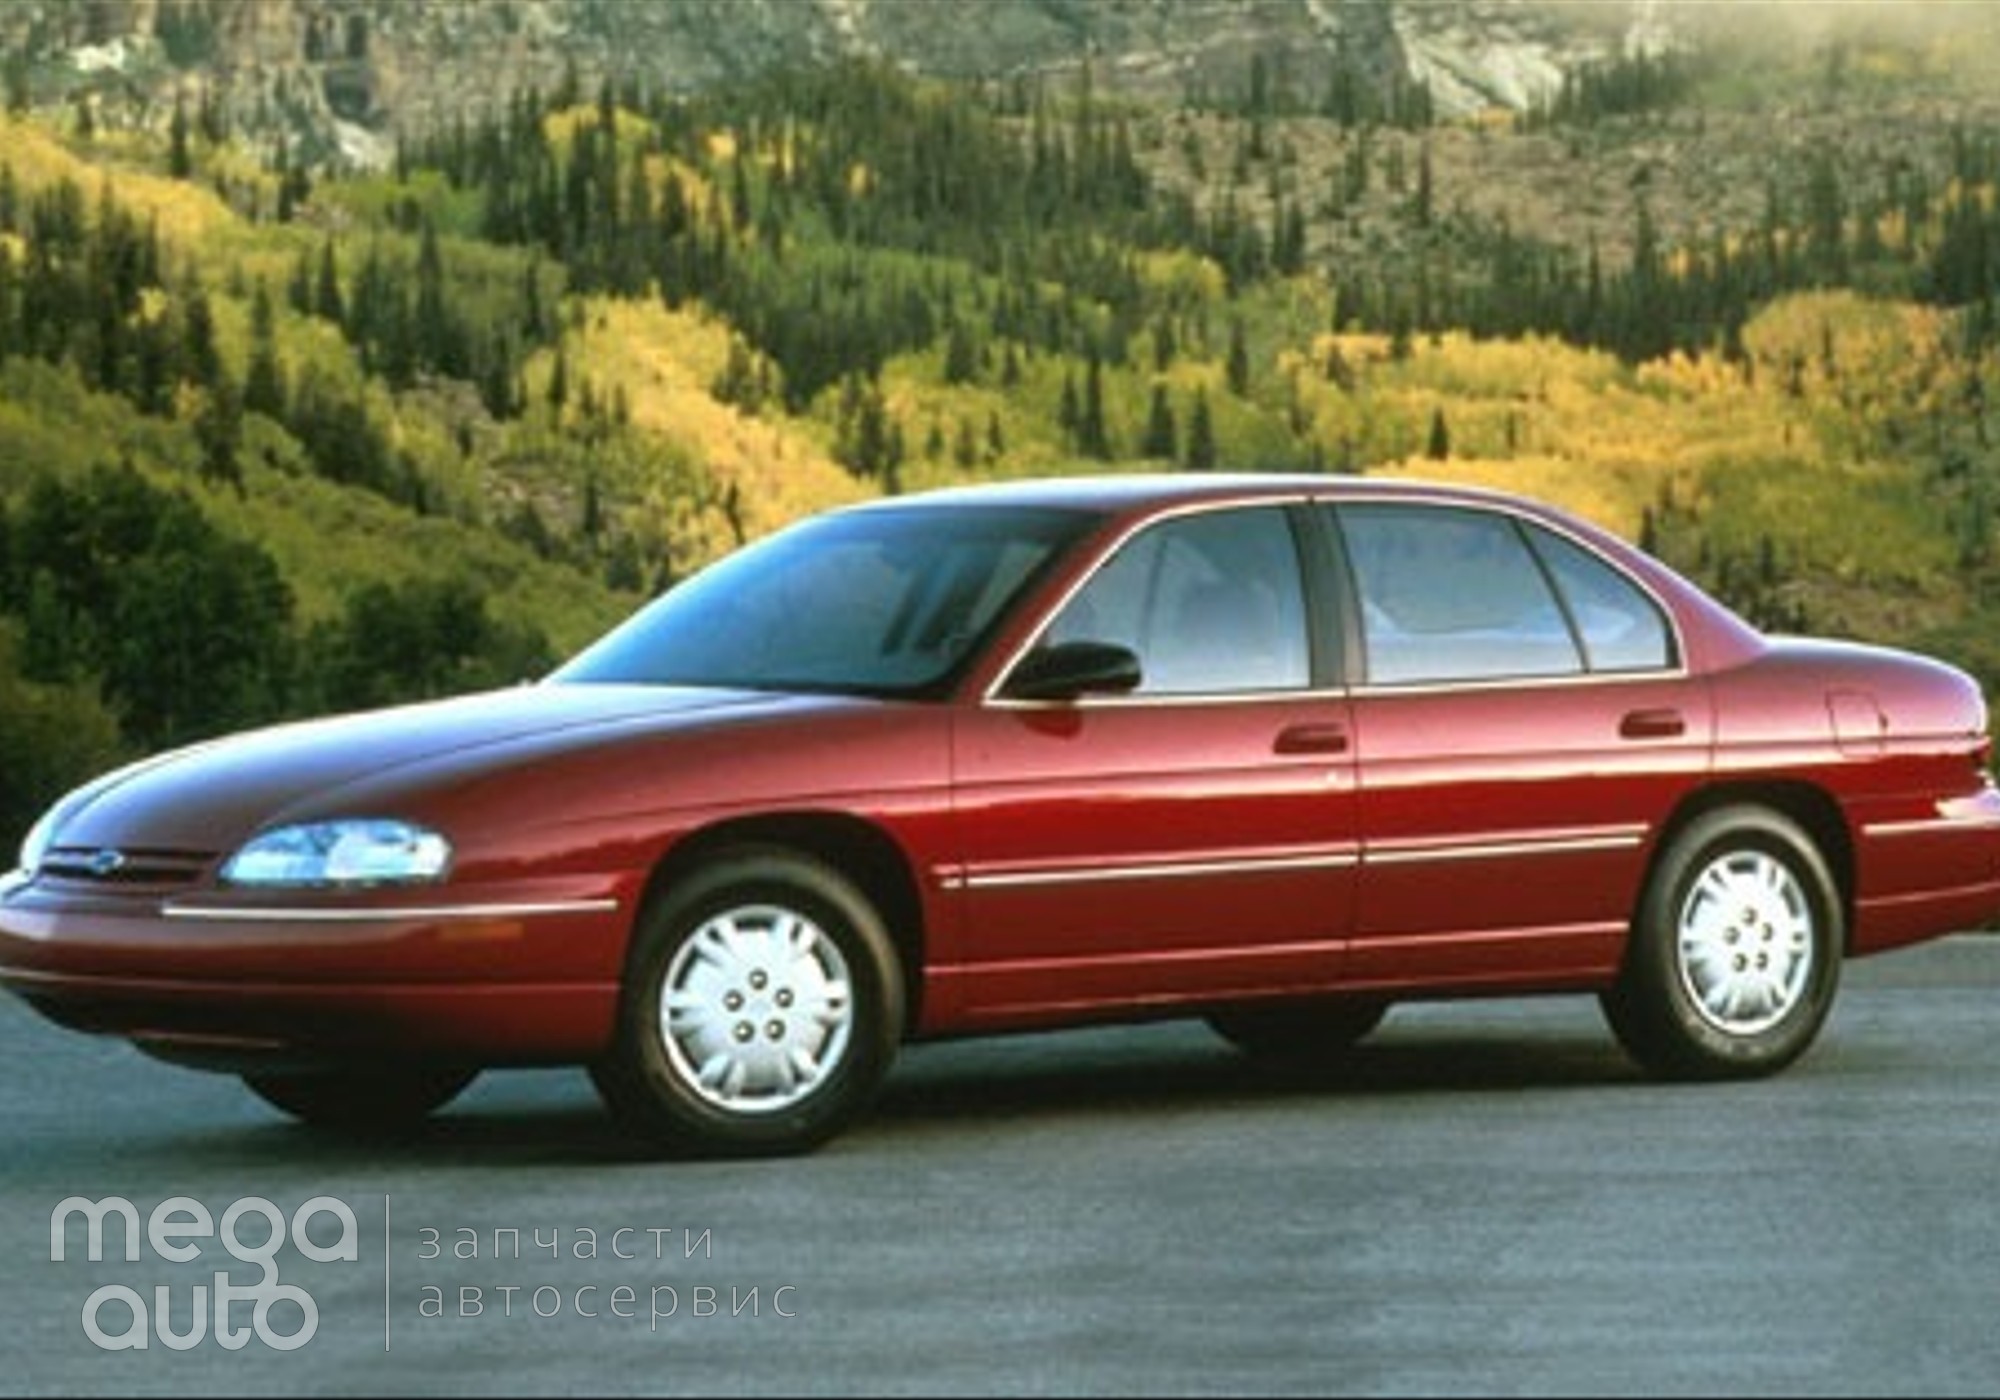 Chevrolet Lumina 1995 г. в разборе